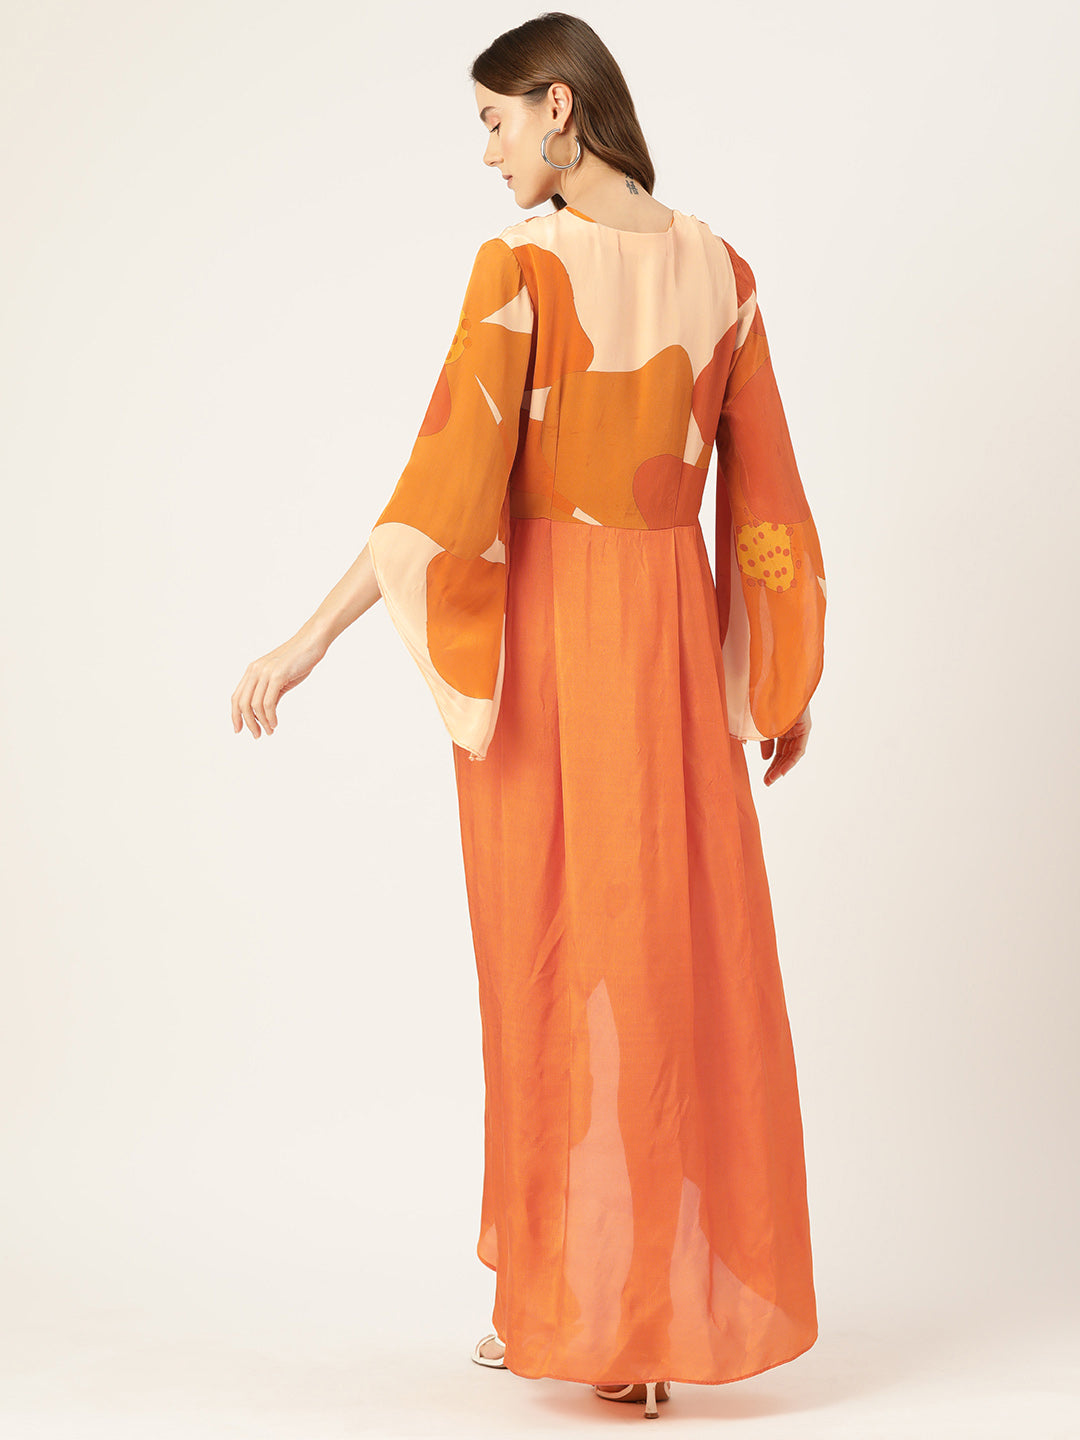 Designer Orange Chiffon Dress